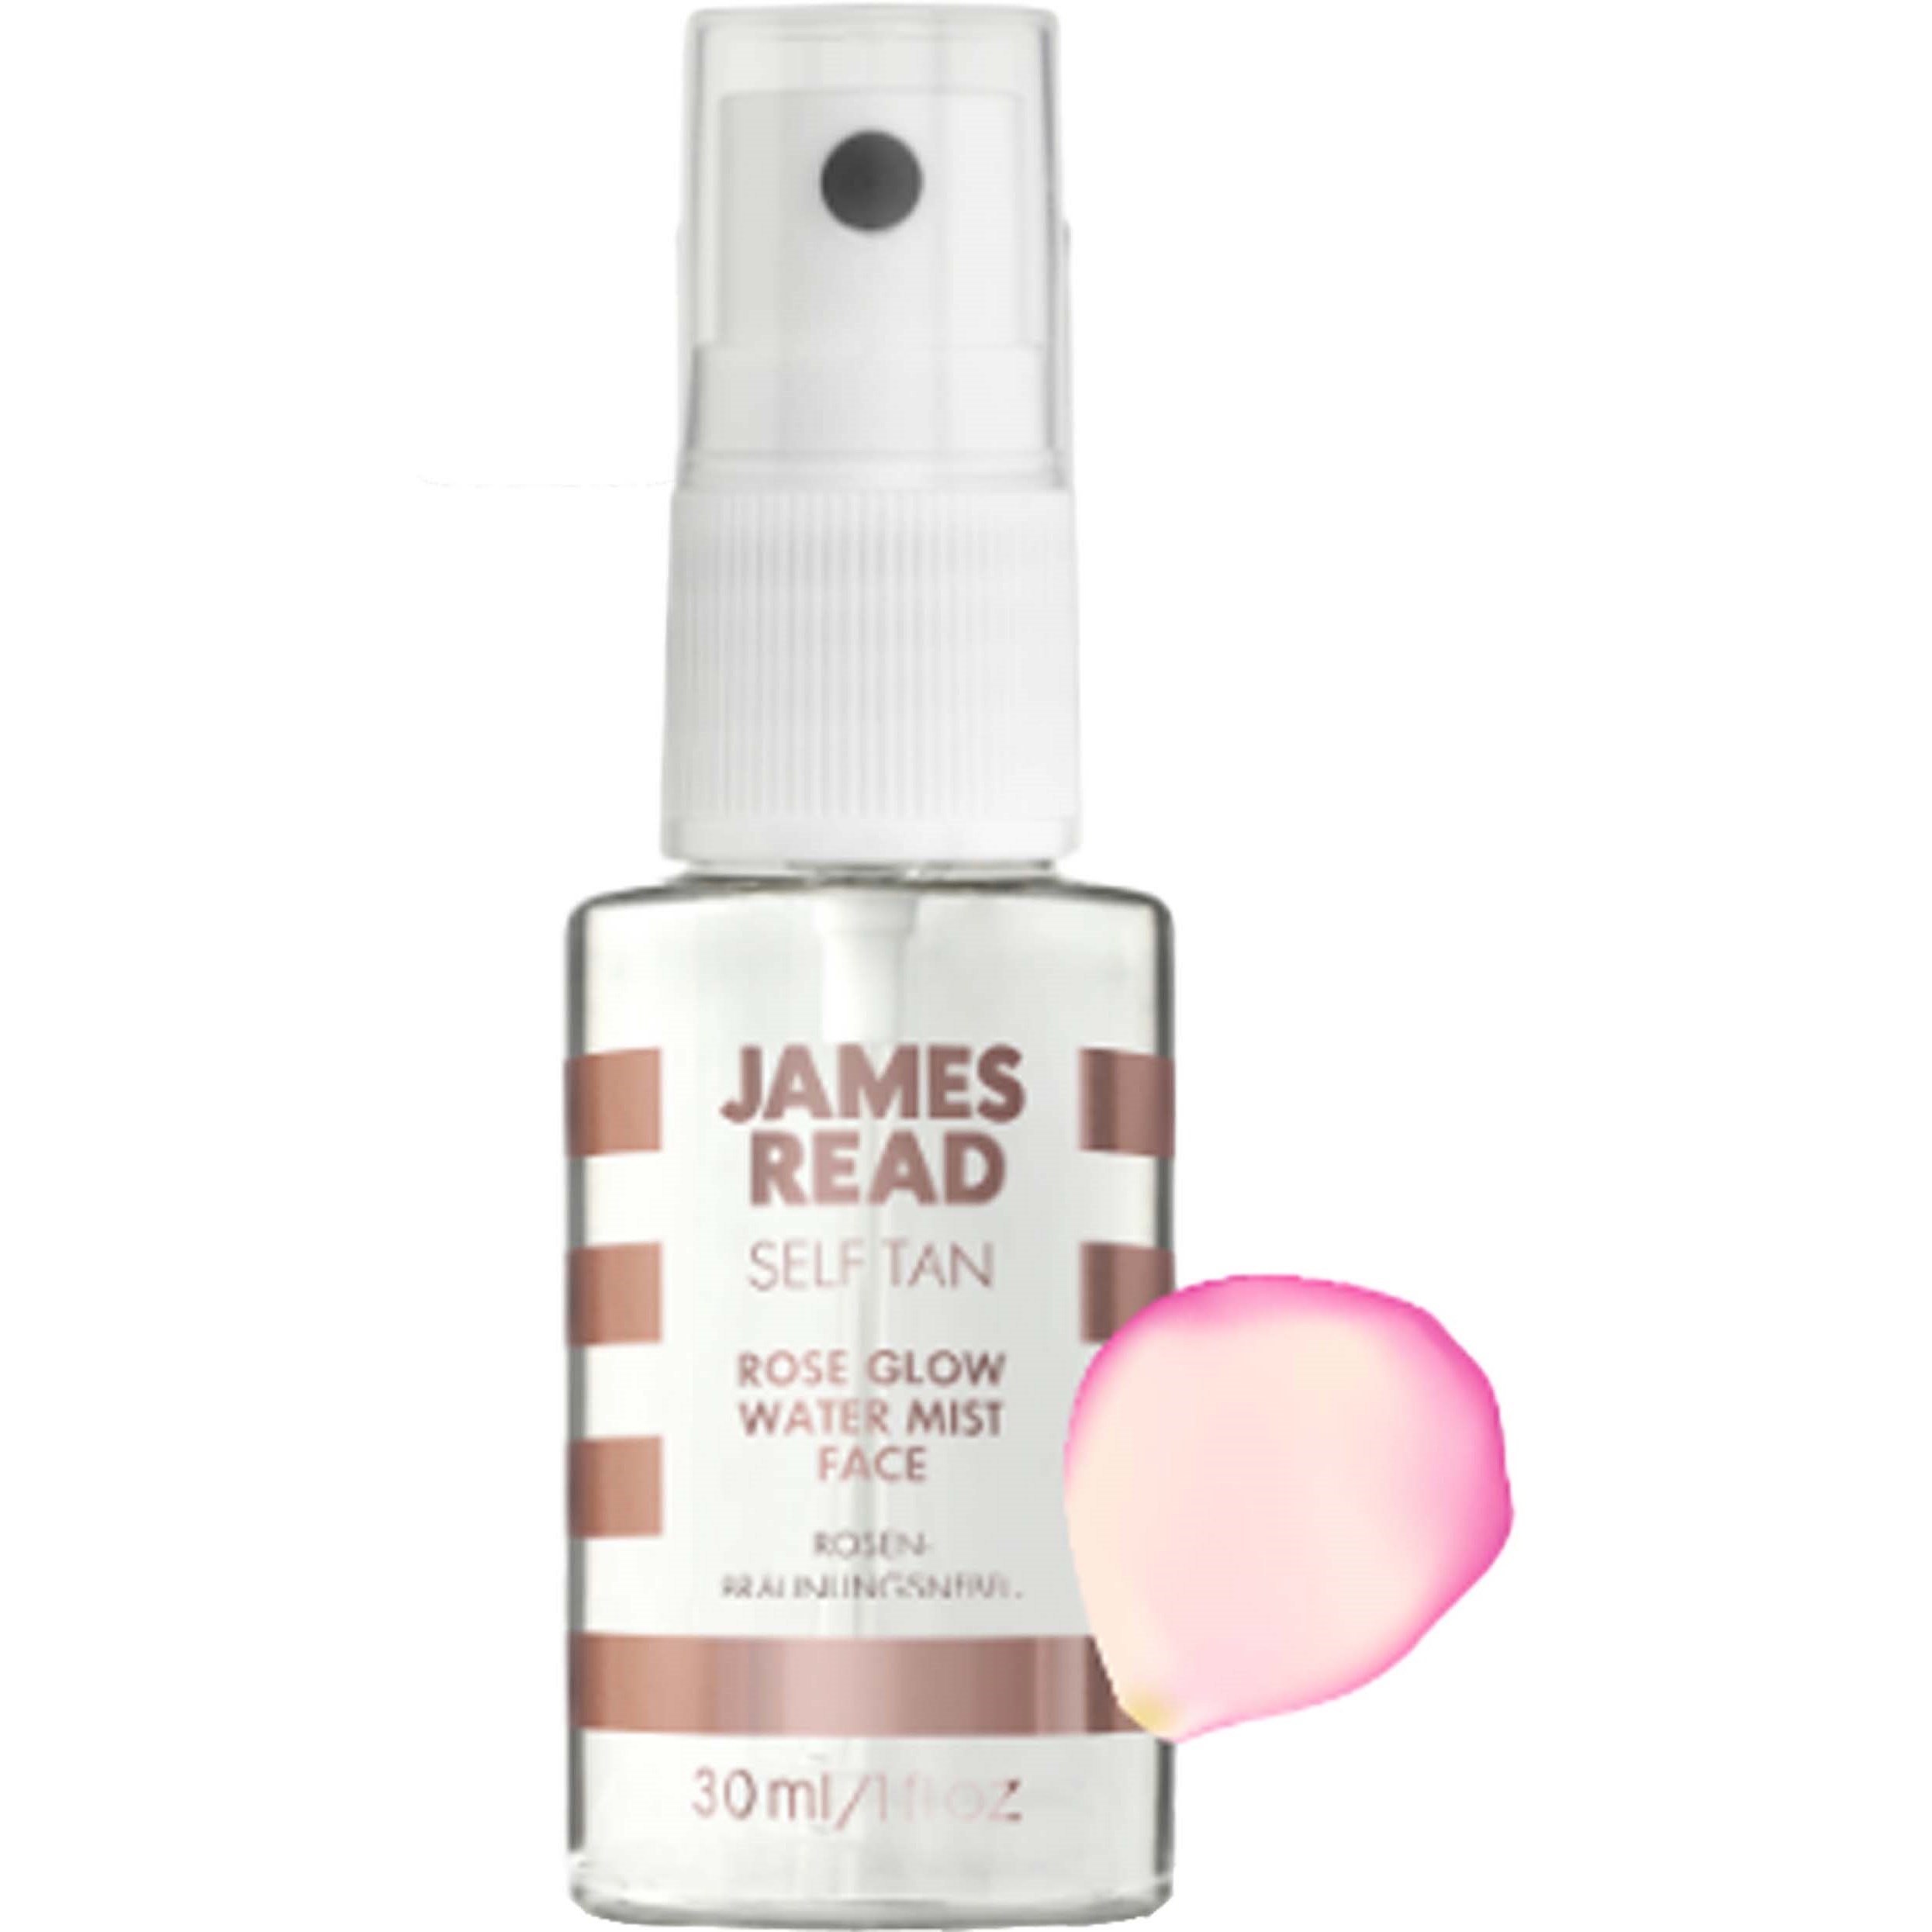 James Read Rose Glow Tan Mist Face 30 ml